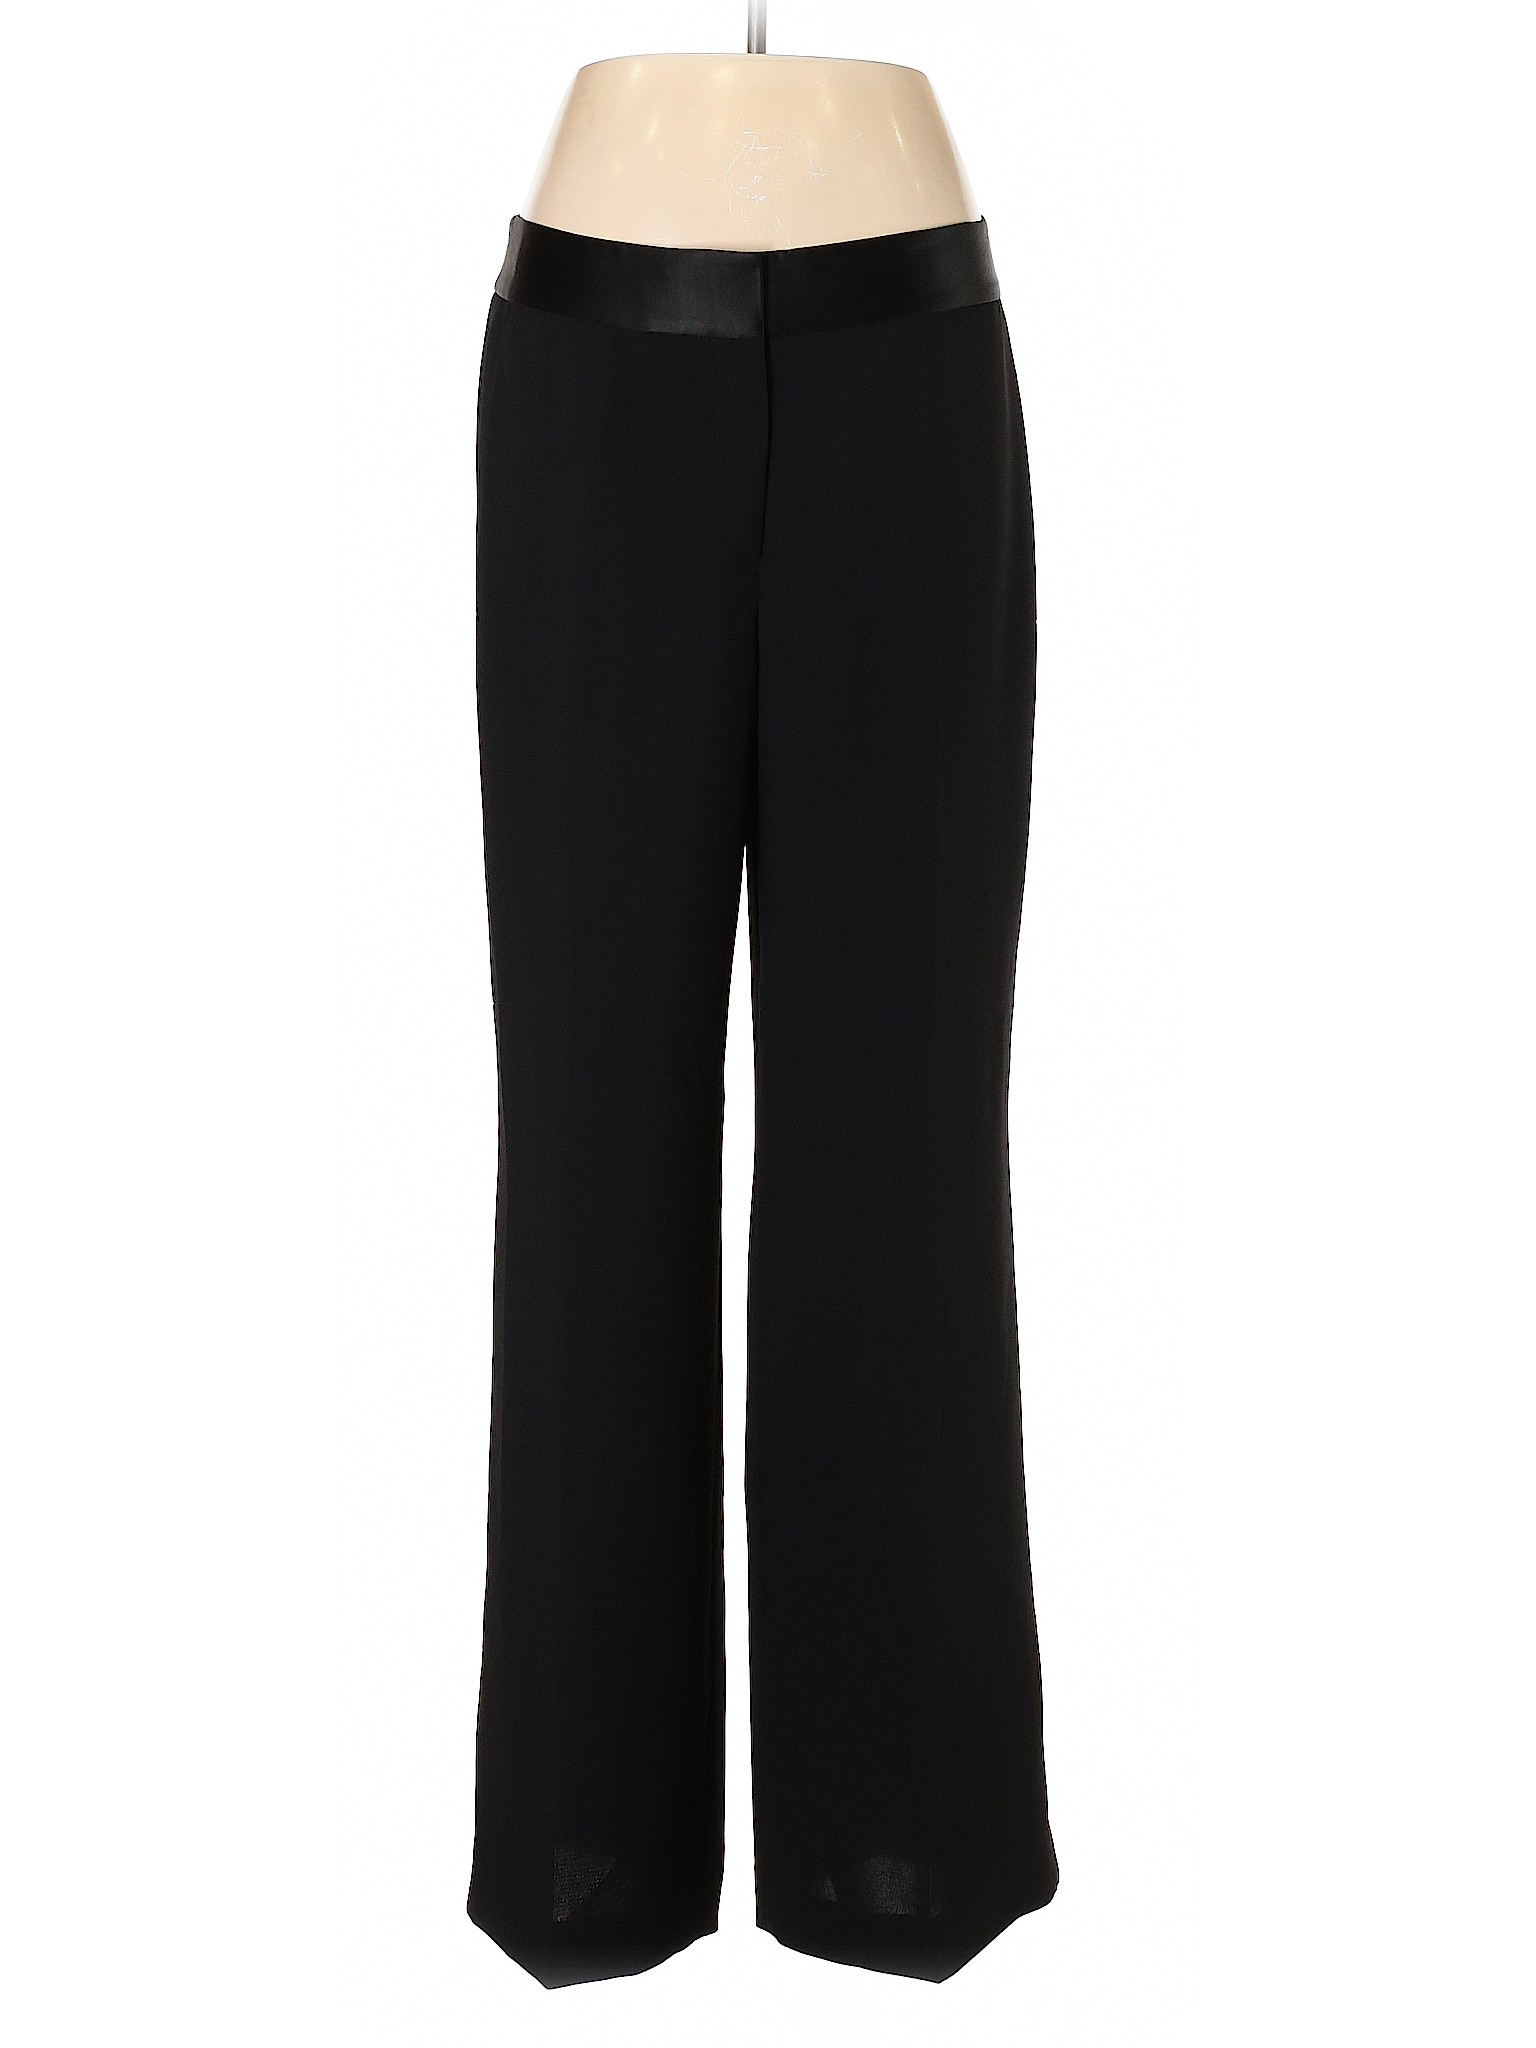 Talbots Women Black Dress Pants 12 | eBay